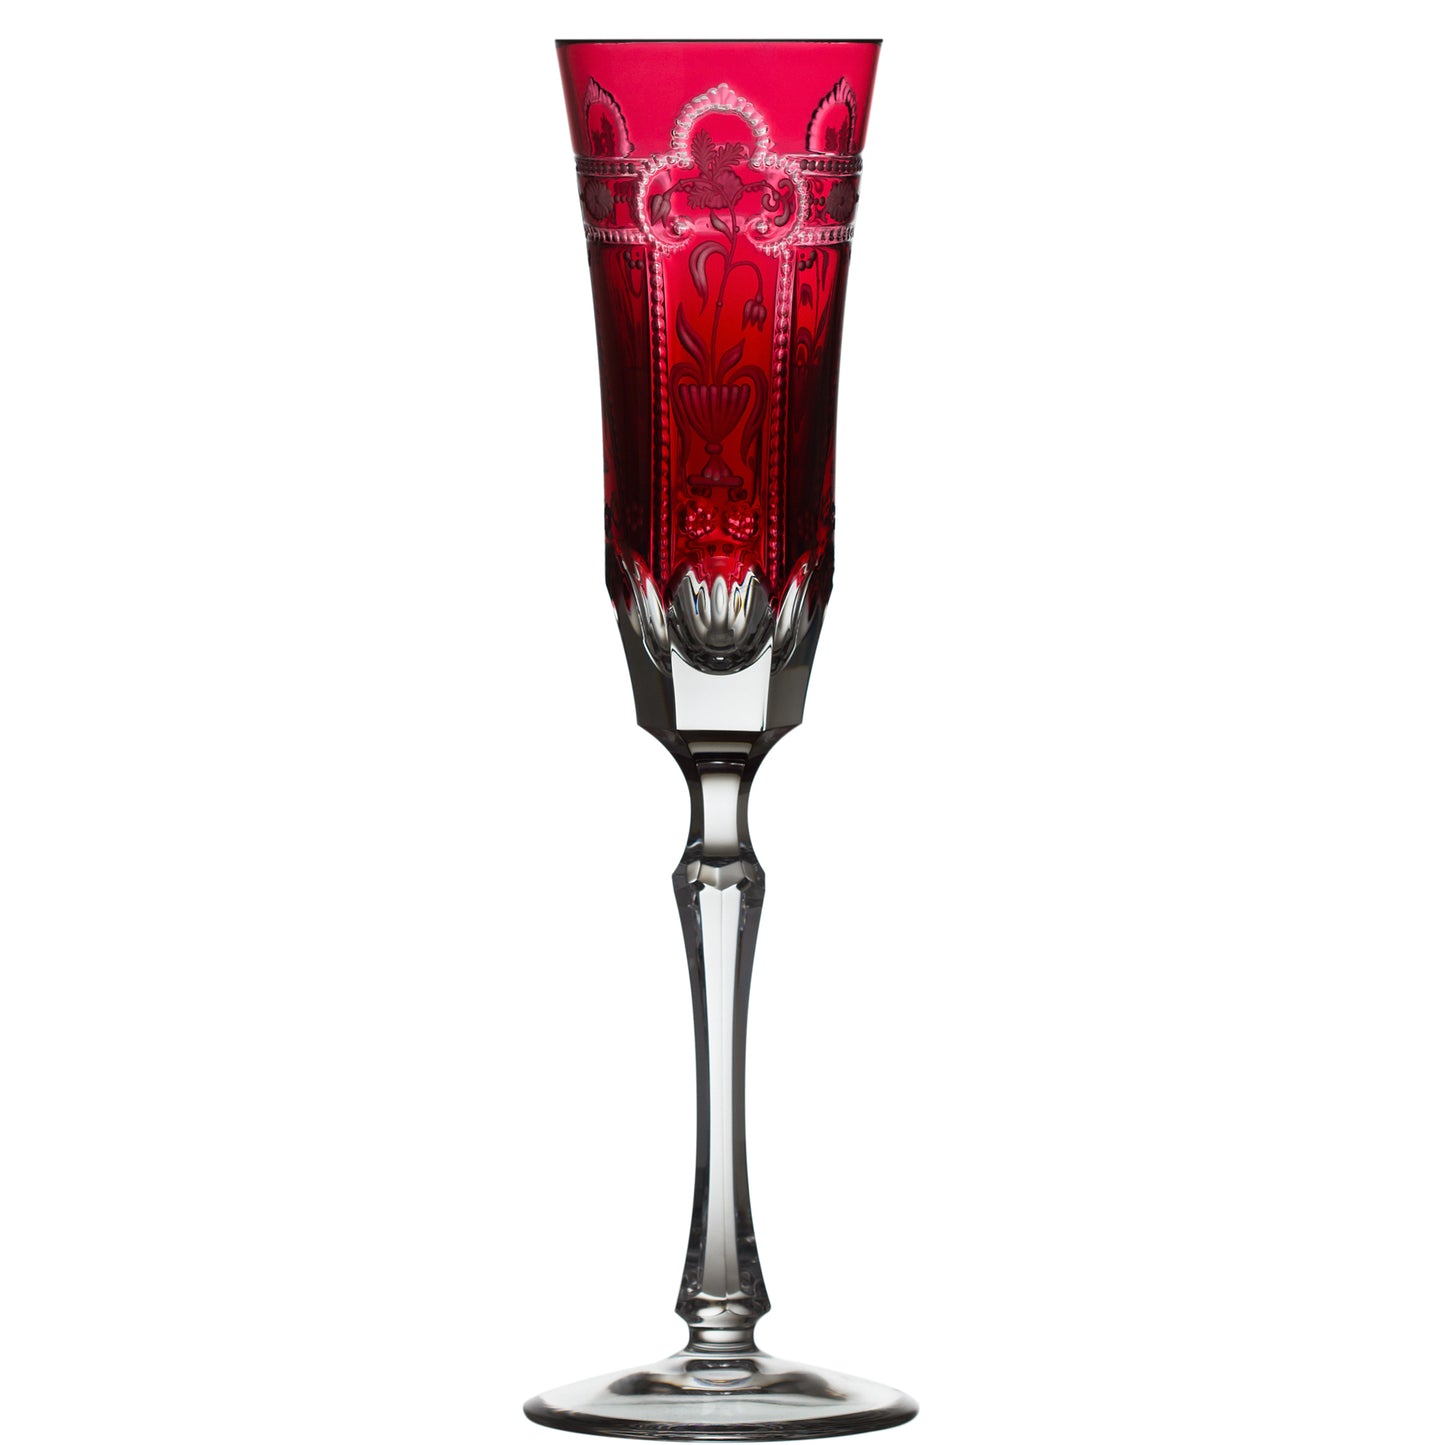 Varga Crystal Imperial Raspberry Champagne Flute Pressed Stem